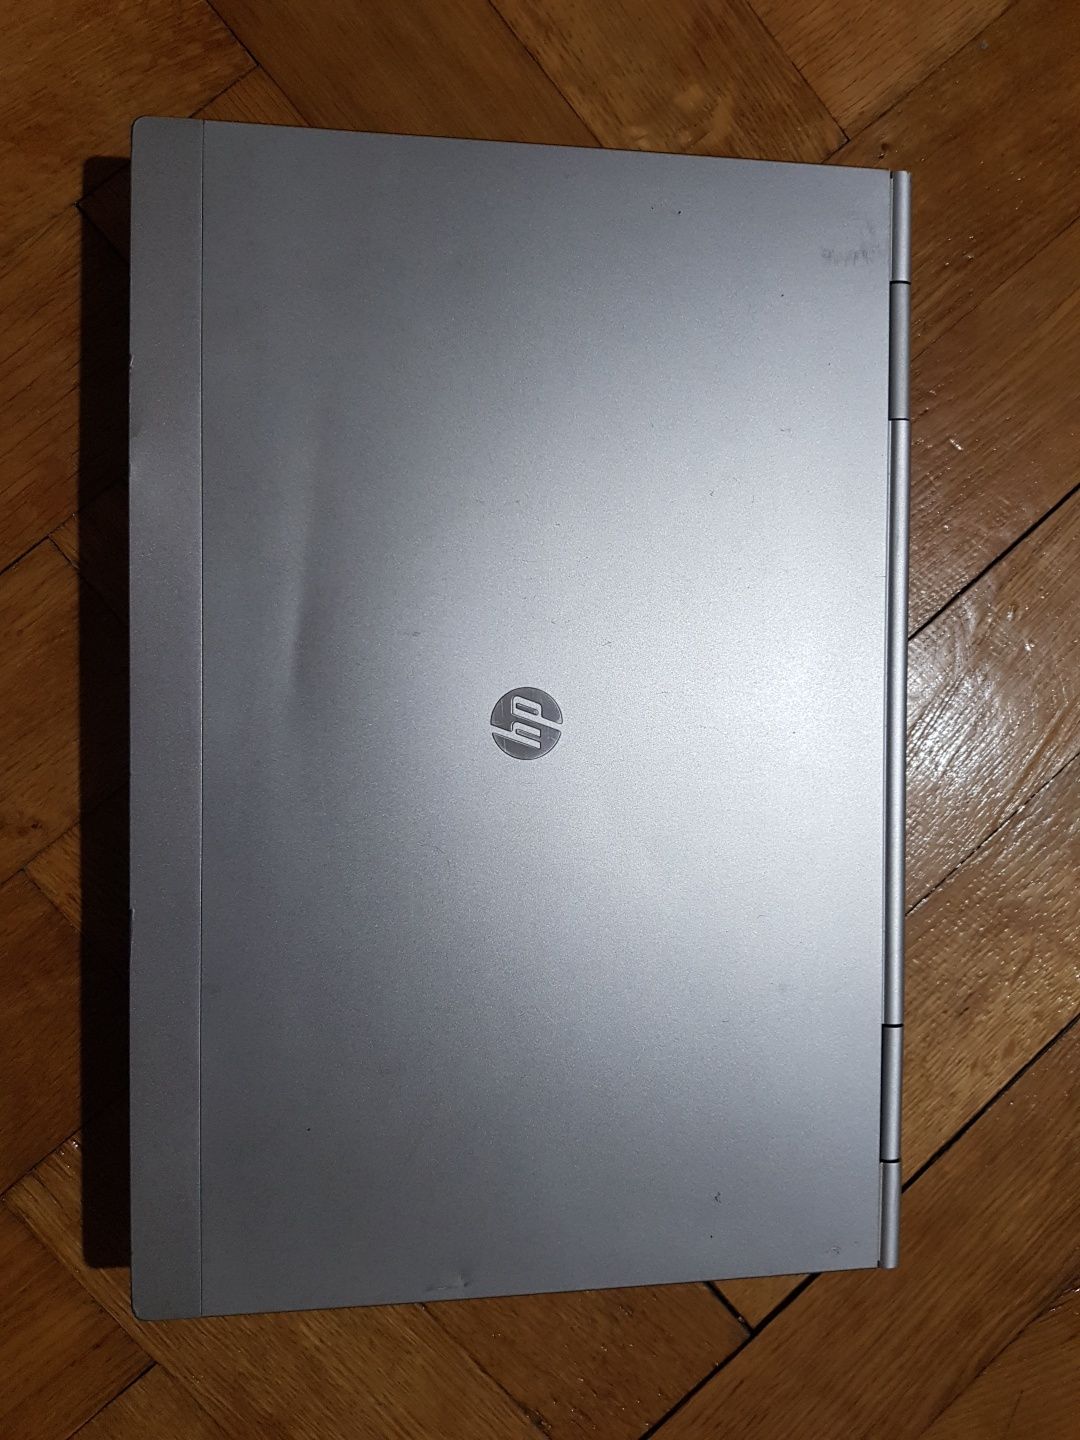 Carcasa completa HP EliteBook 2560p